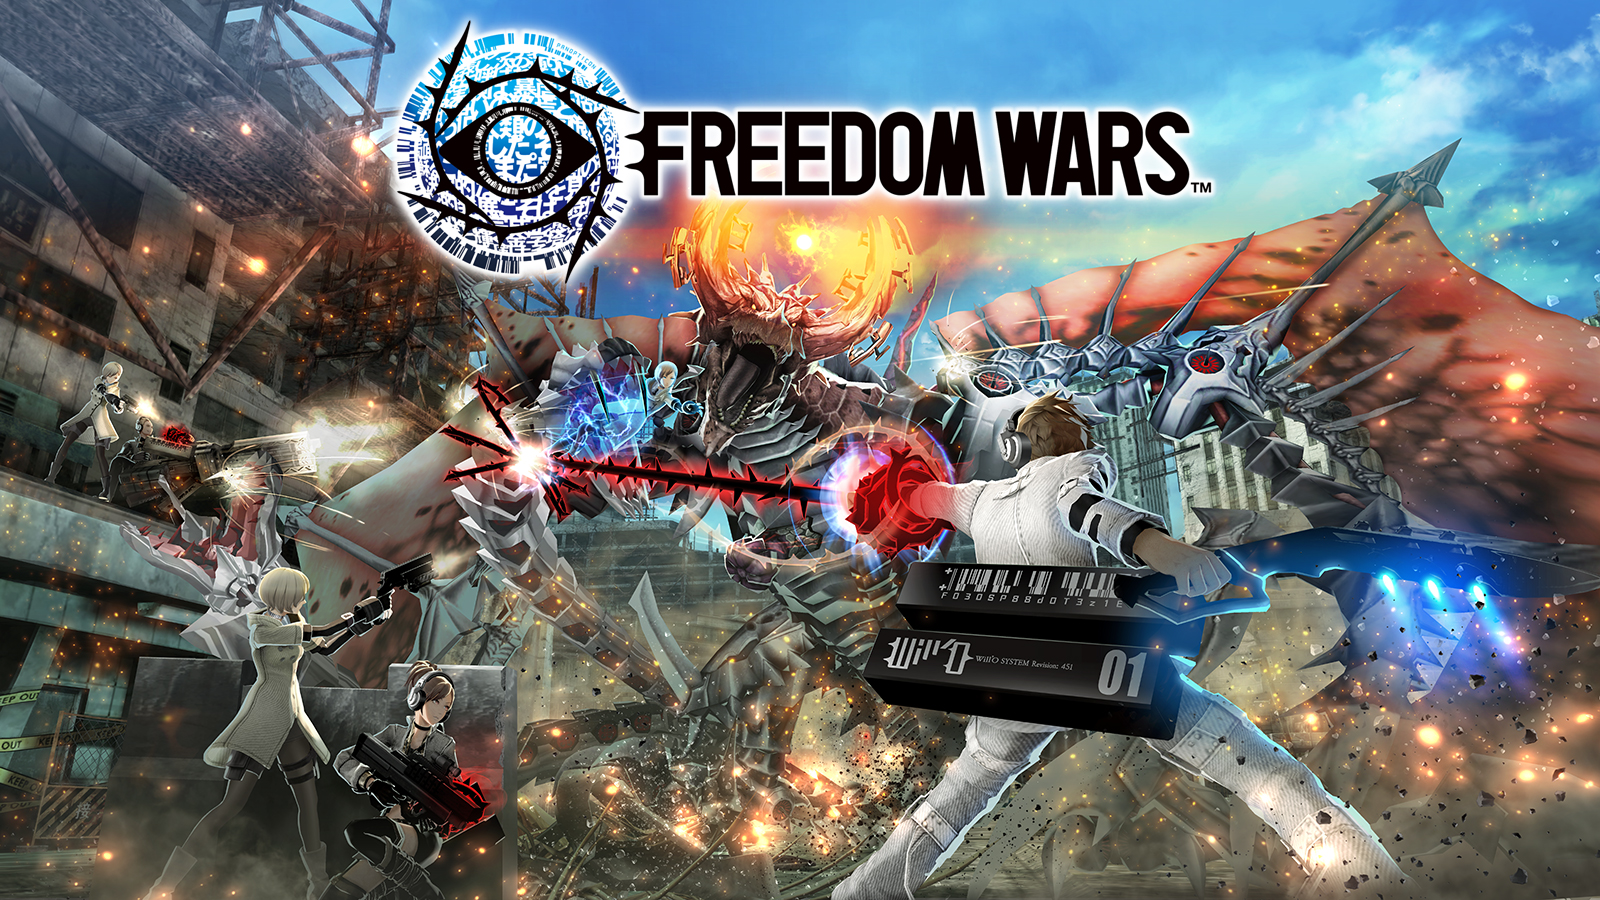 Freedom Wars - PS Vita